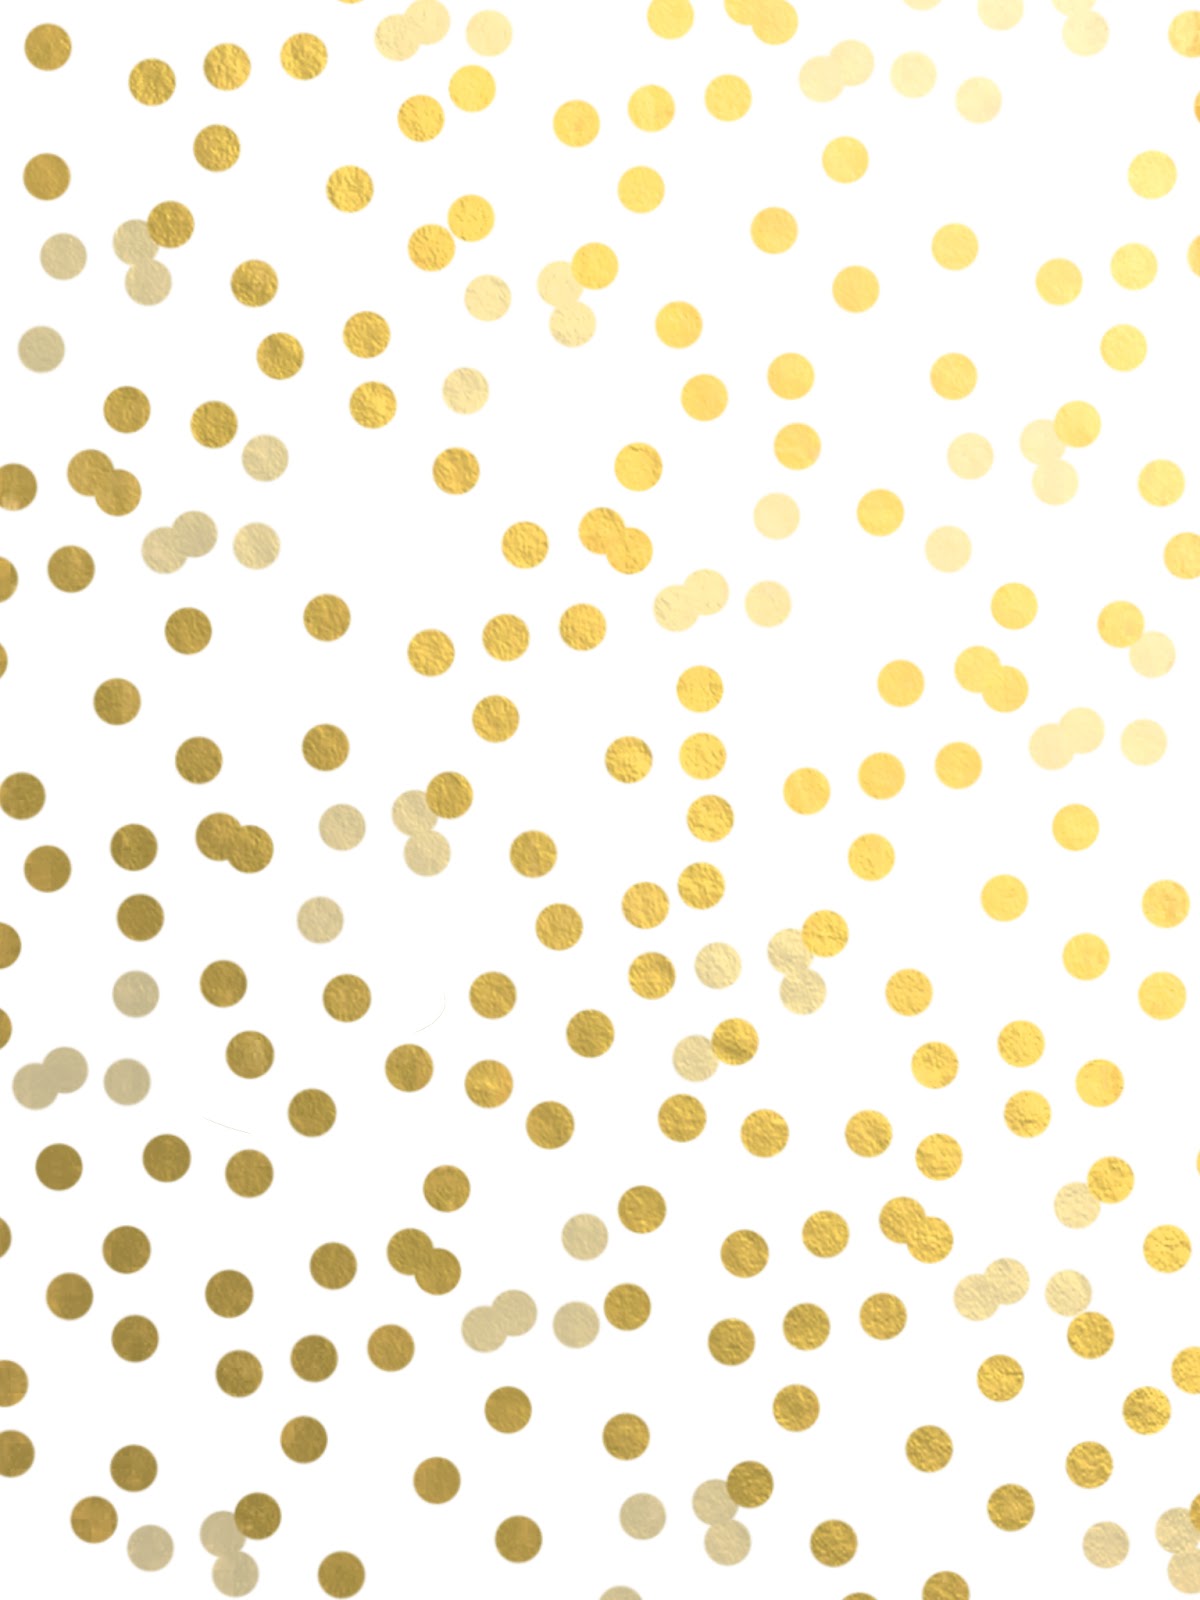 48+] Gold Polka Dot Wallpaper - WallpaperSafari